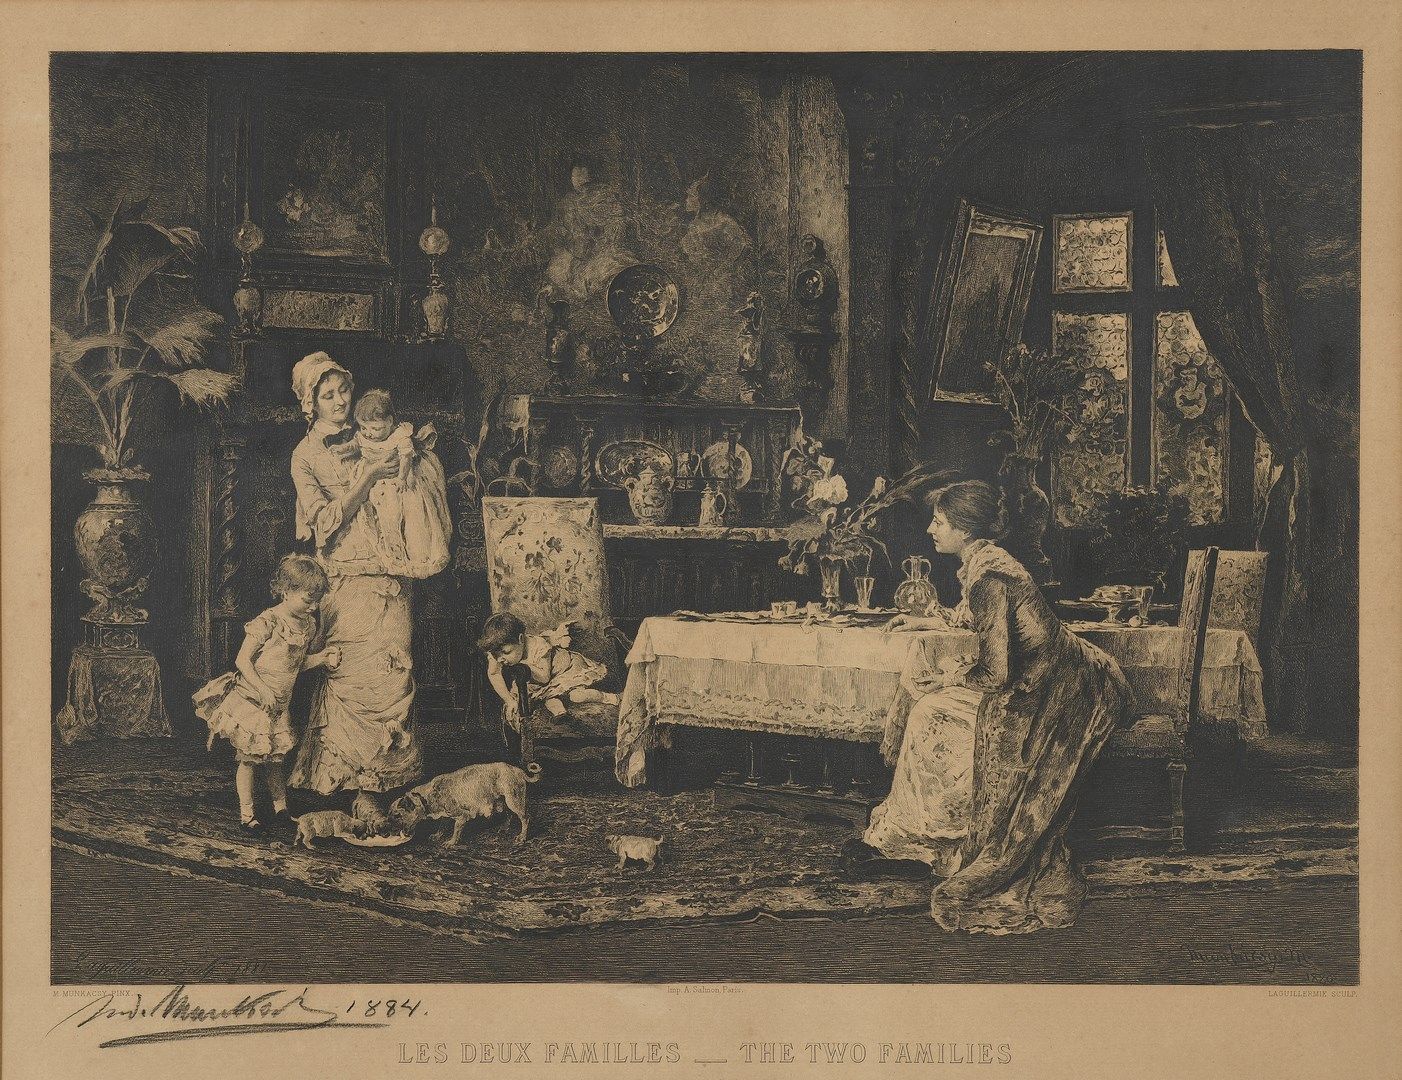 Null 蒙卡西-米哈伊，1844-1900年

这两个家庭，1880年

Laguillermie雕刻的黑色蚀刻画，由A.Salmon在巴黎印刷（日照）。

&hellip;